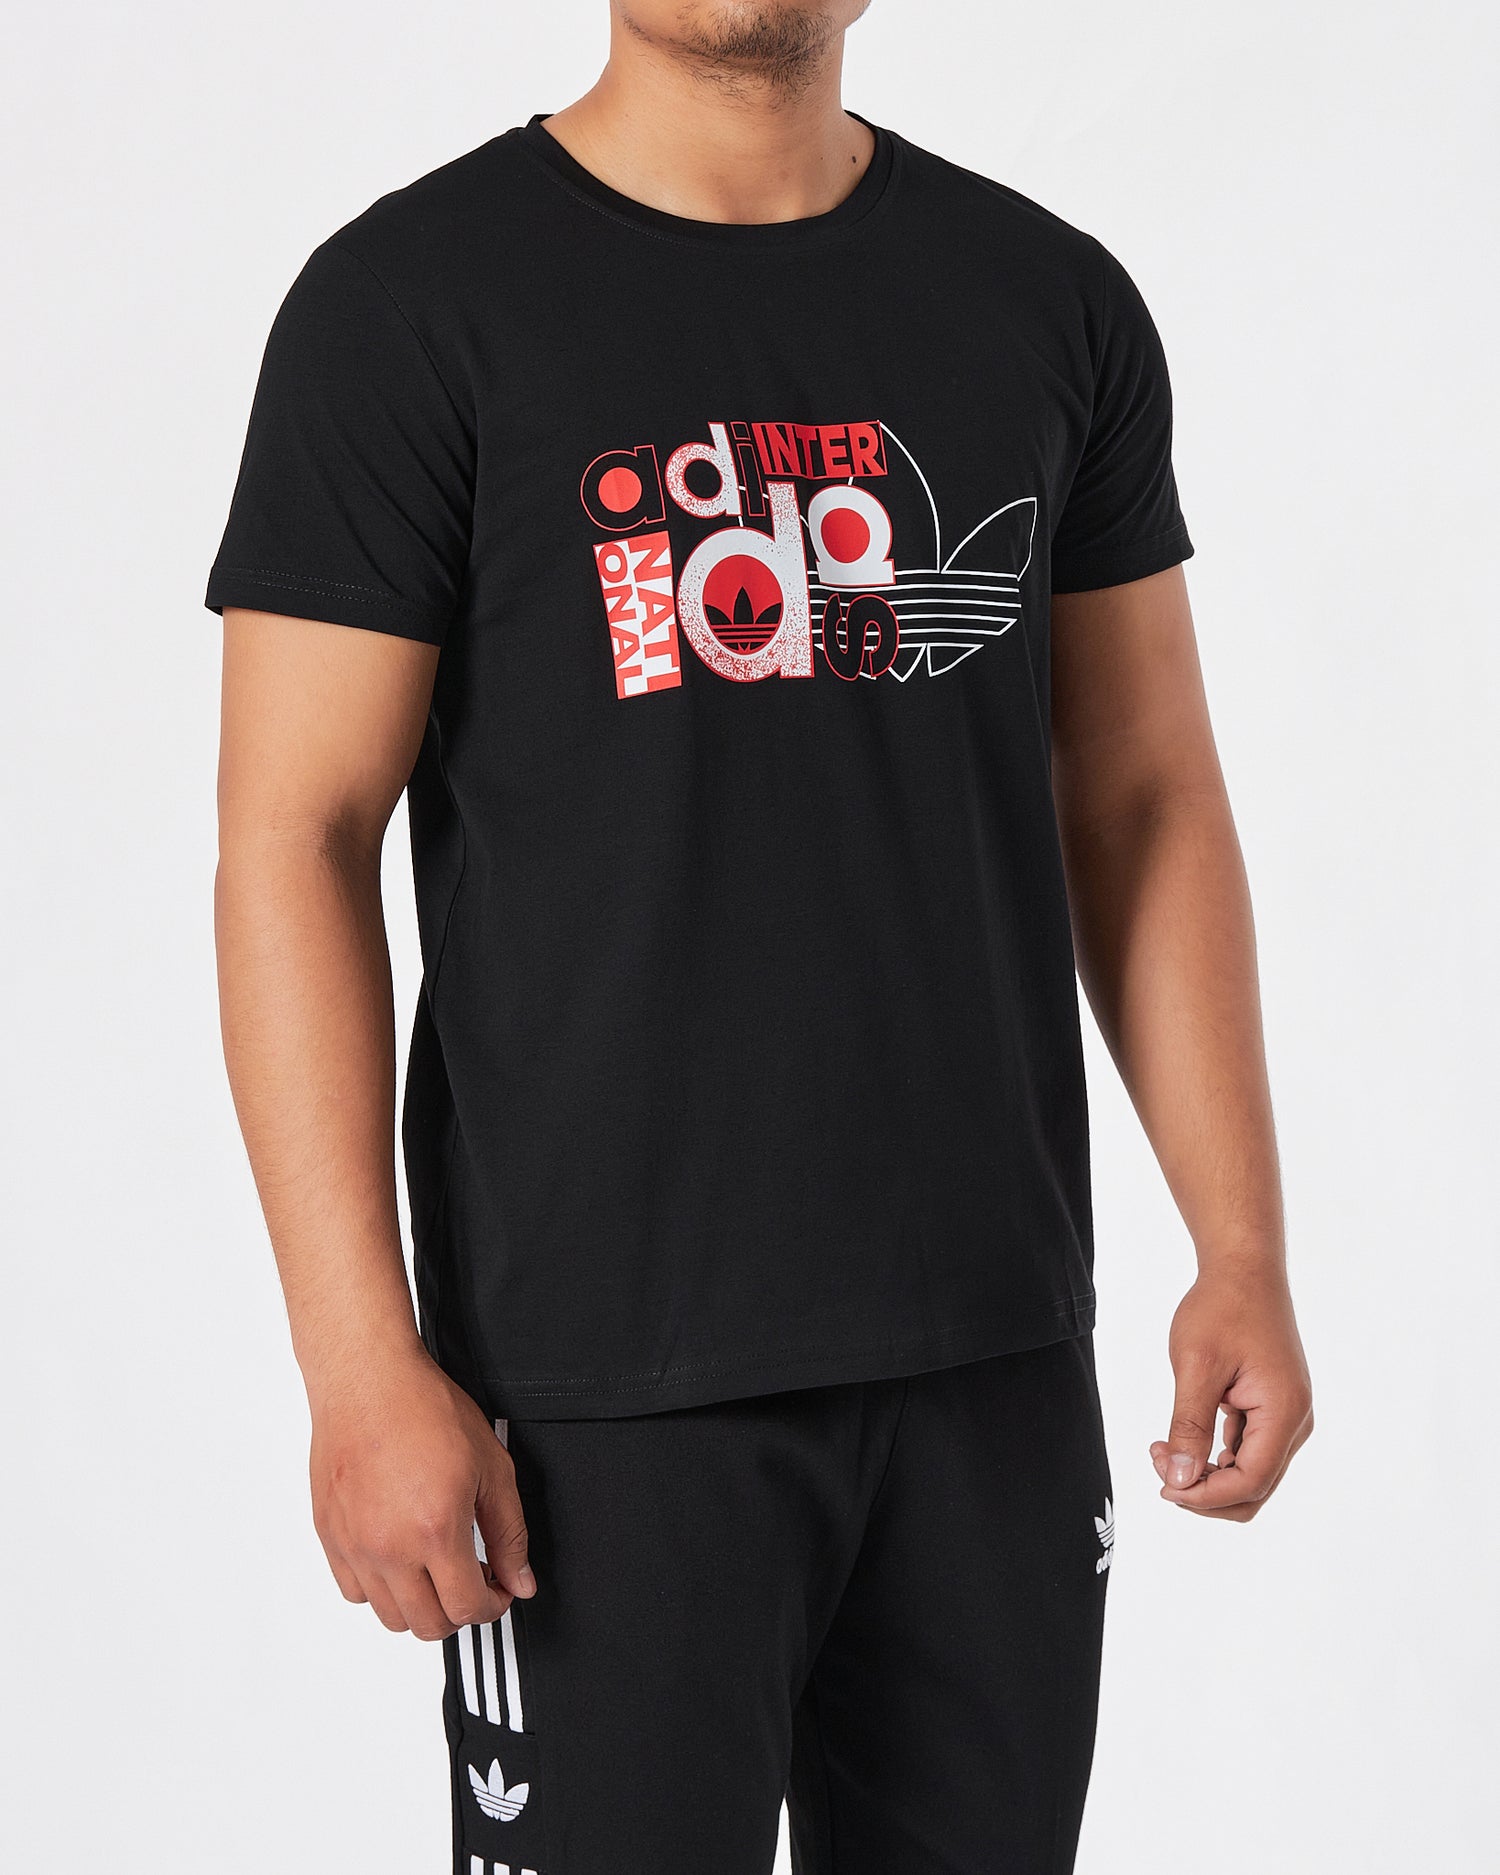 ADI Inter Logo Printed Men Black T-Shirt 15.90